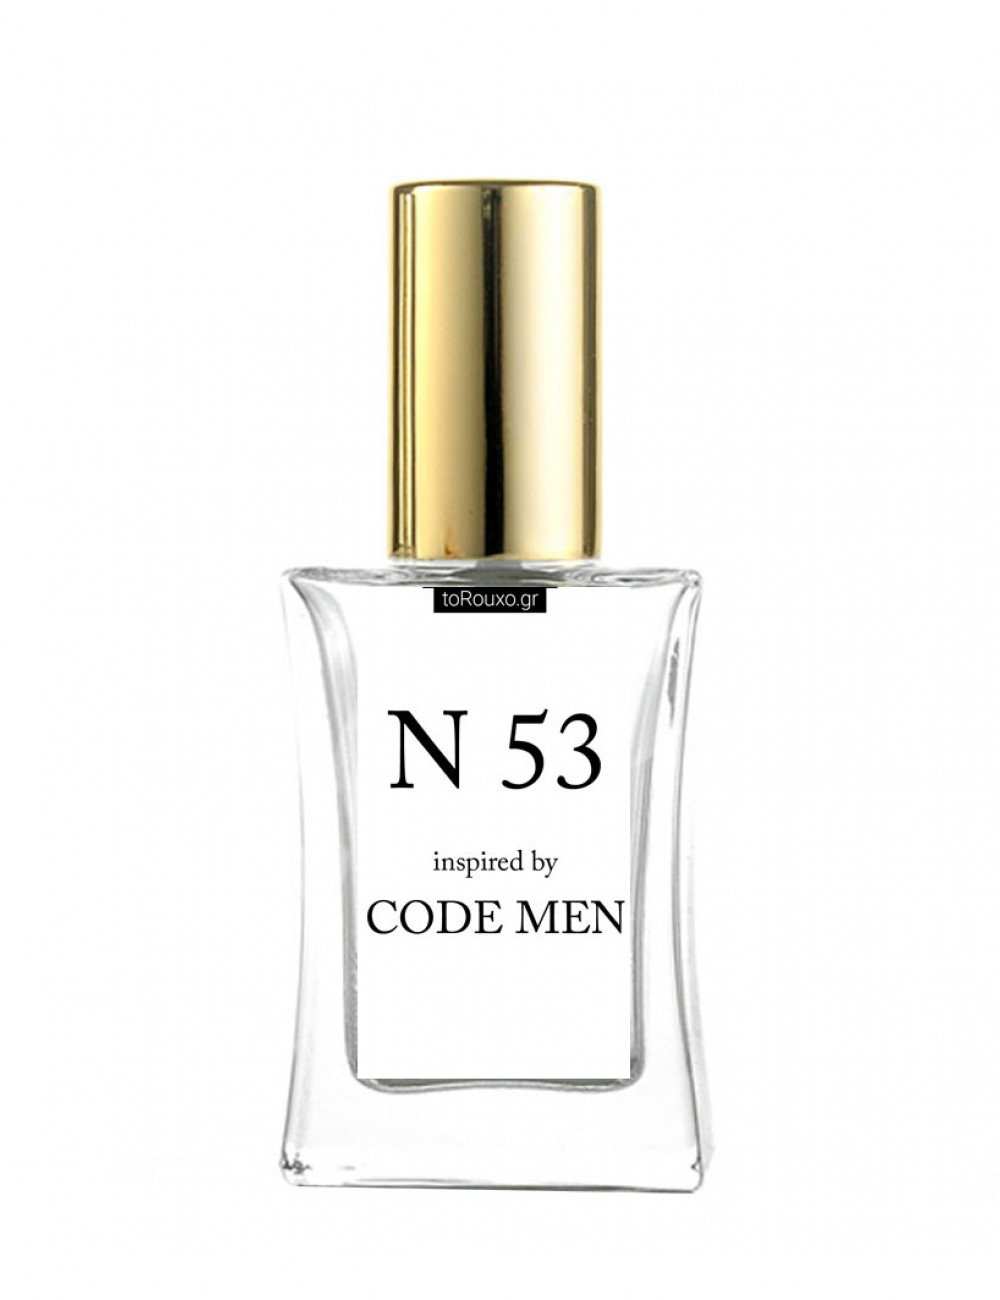 N53 εμπνευσμένο από CODE MEN